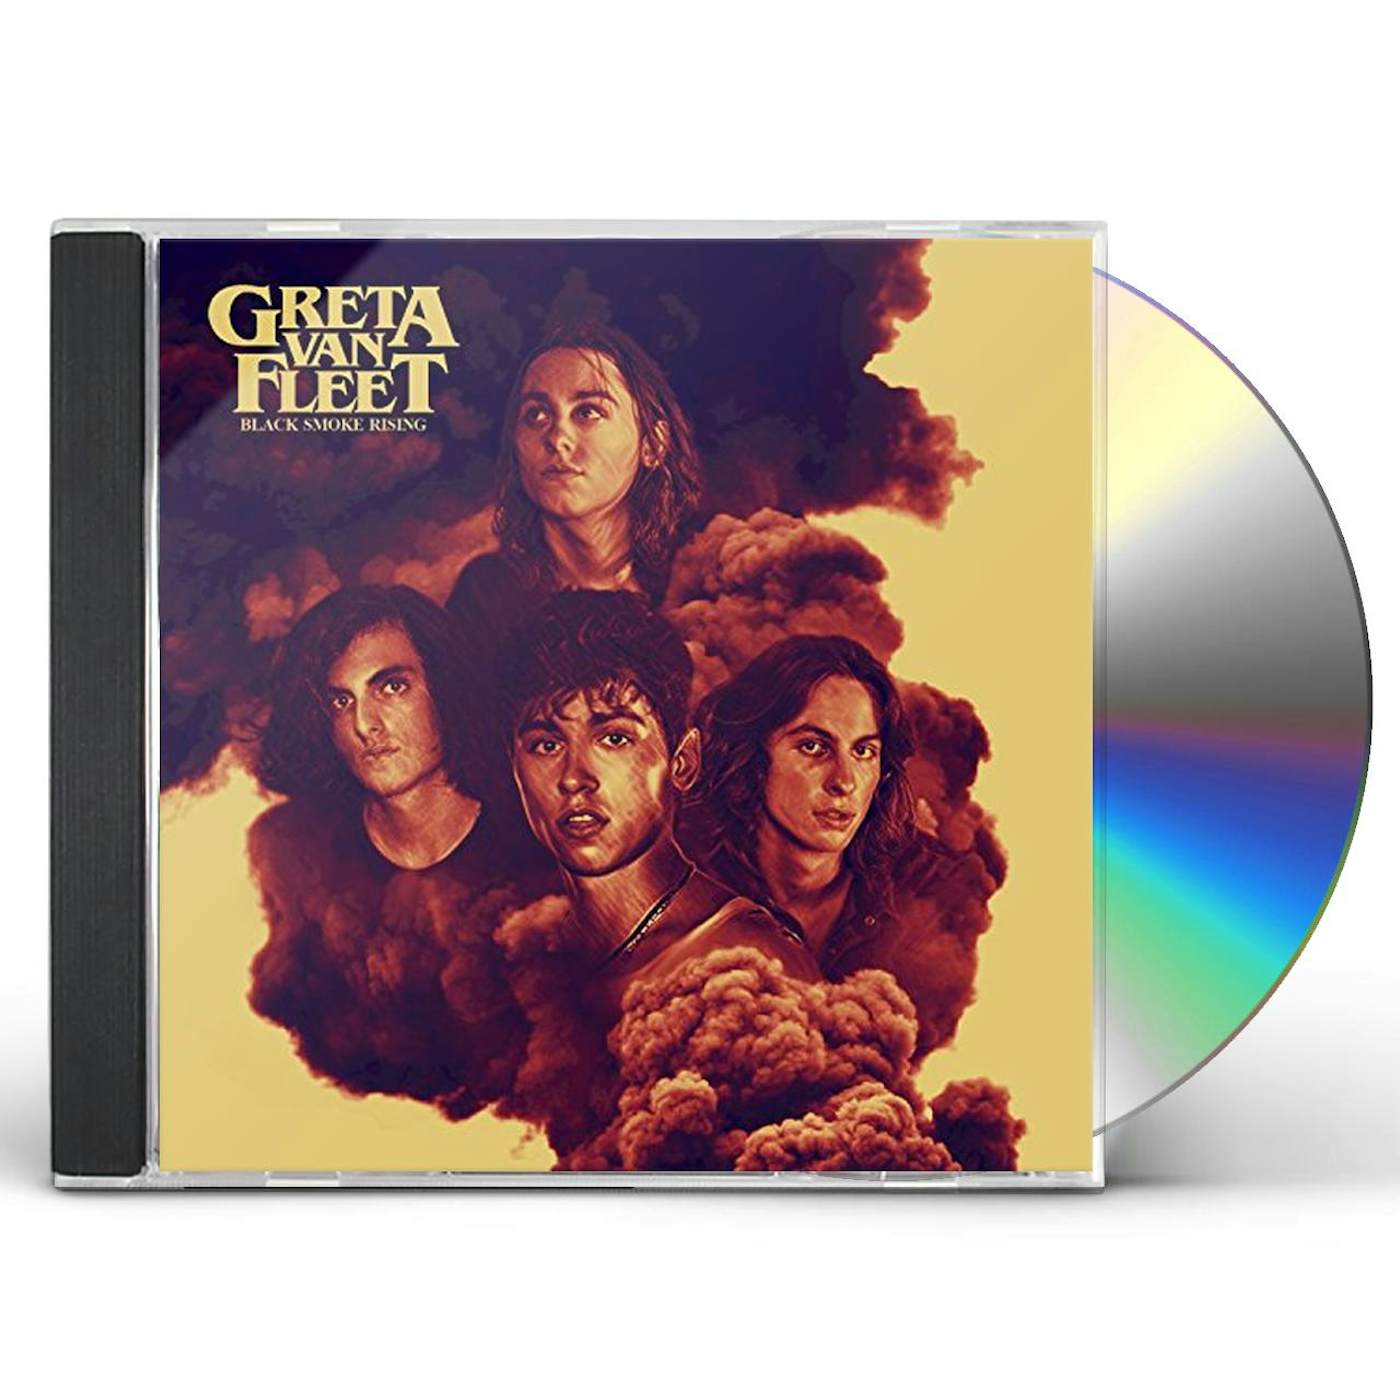 Greta Van Fleet BLACK SMOKE RISING CD